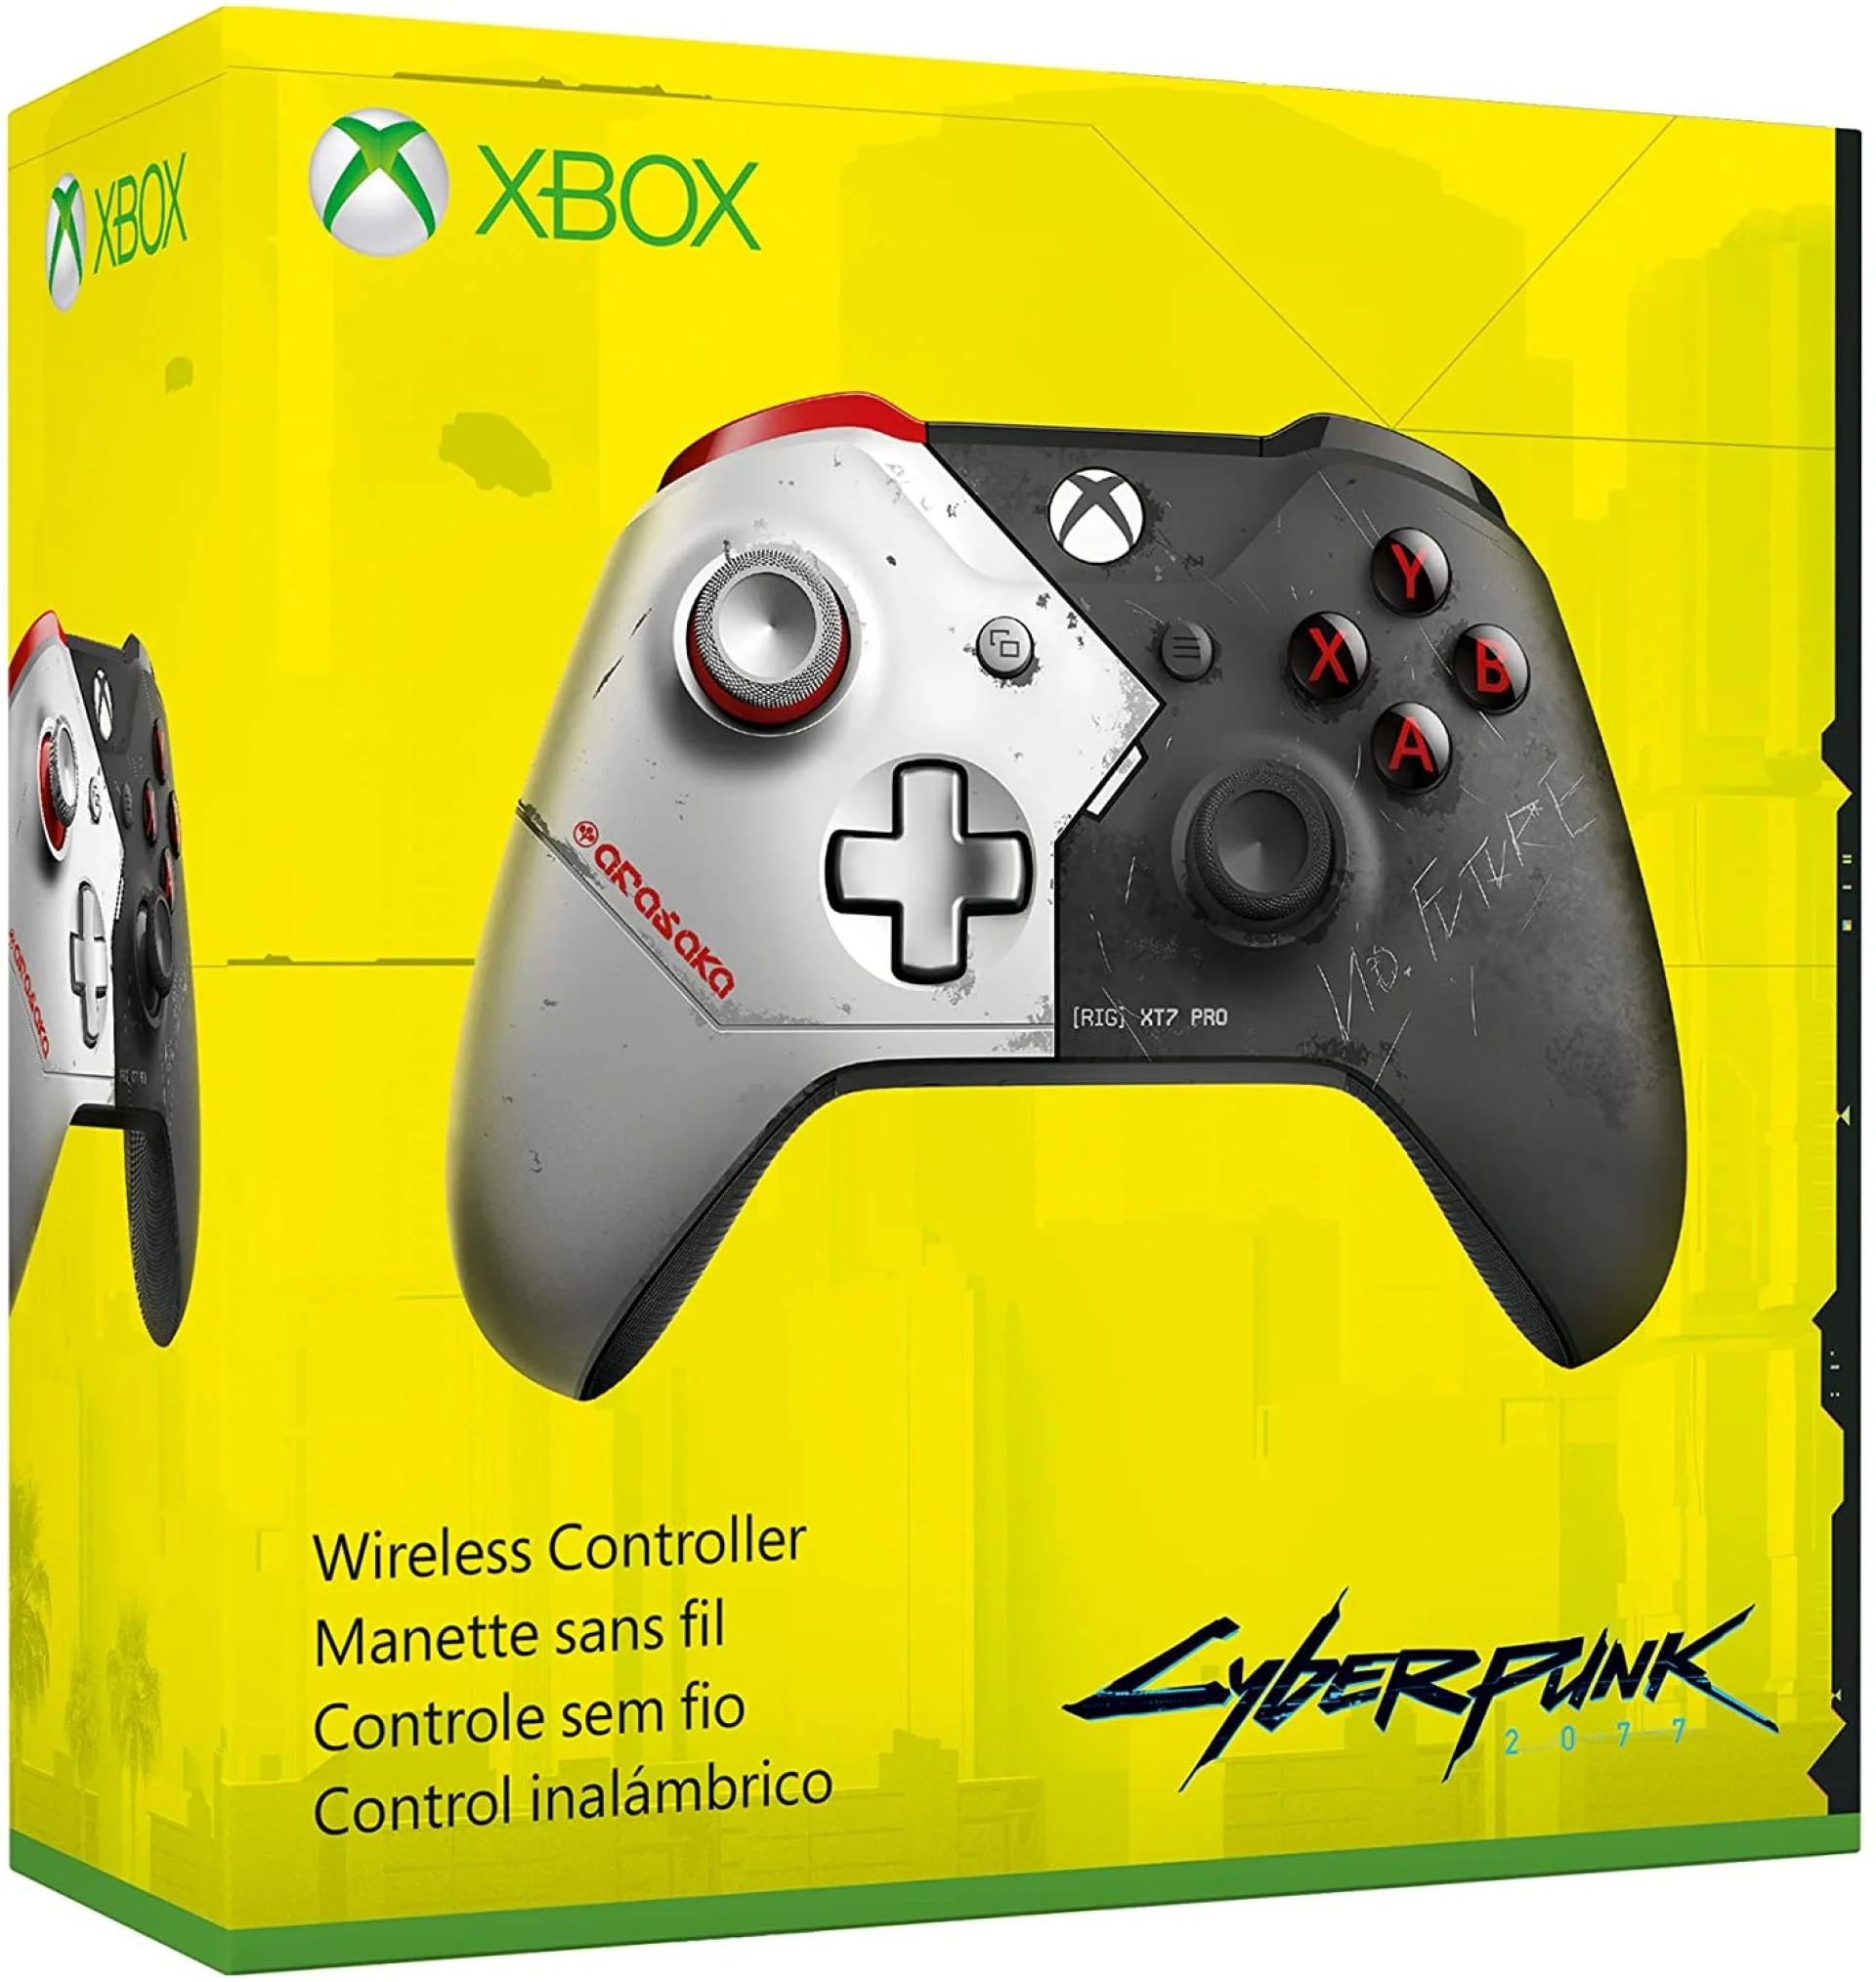 Xbox One Cyberpunk 2077 Controller announced!